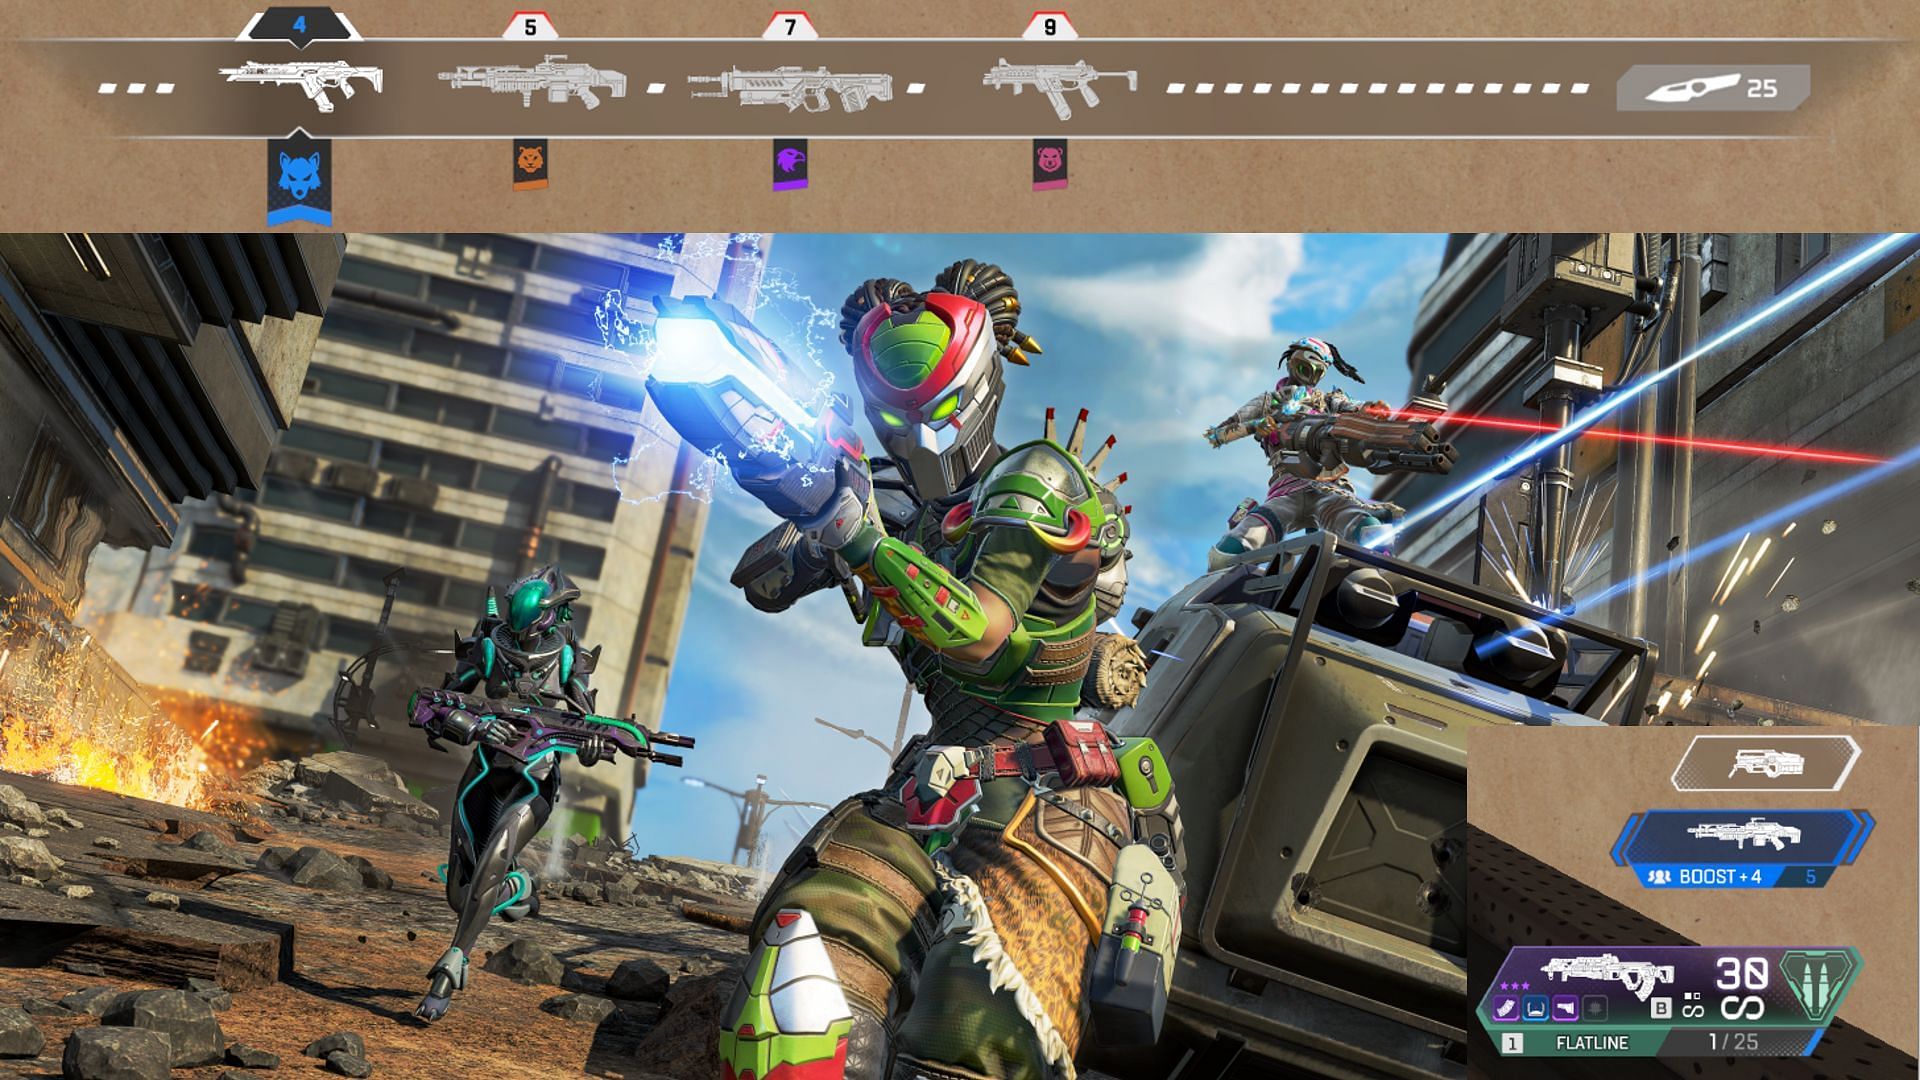 The Gun Run mode features 25 unique weapons to level up through (Image via EA)